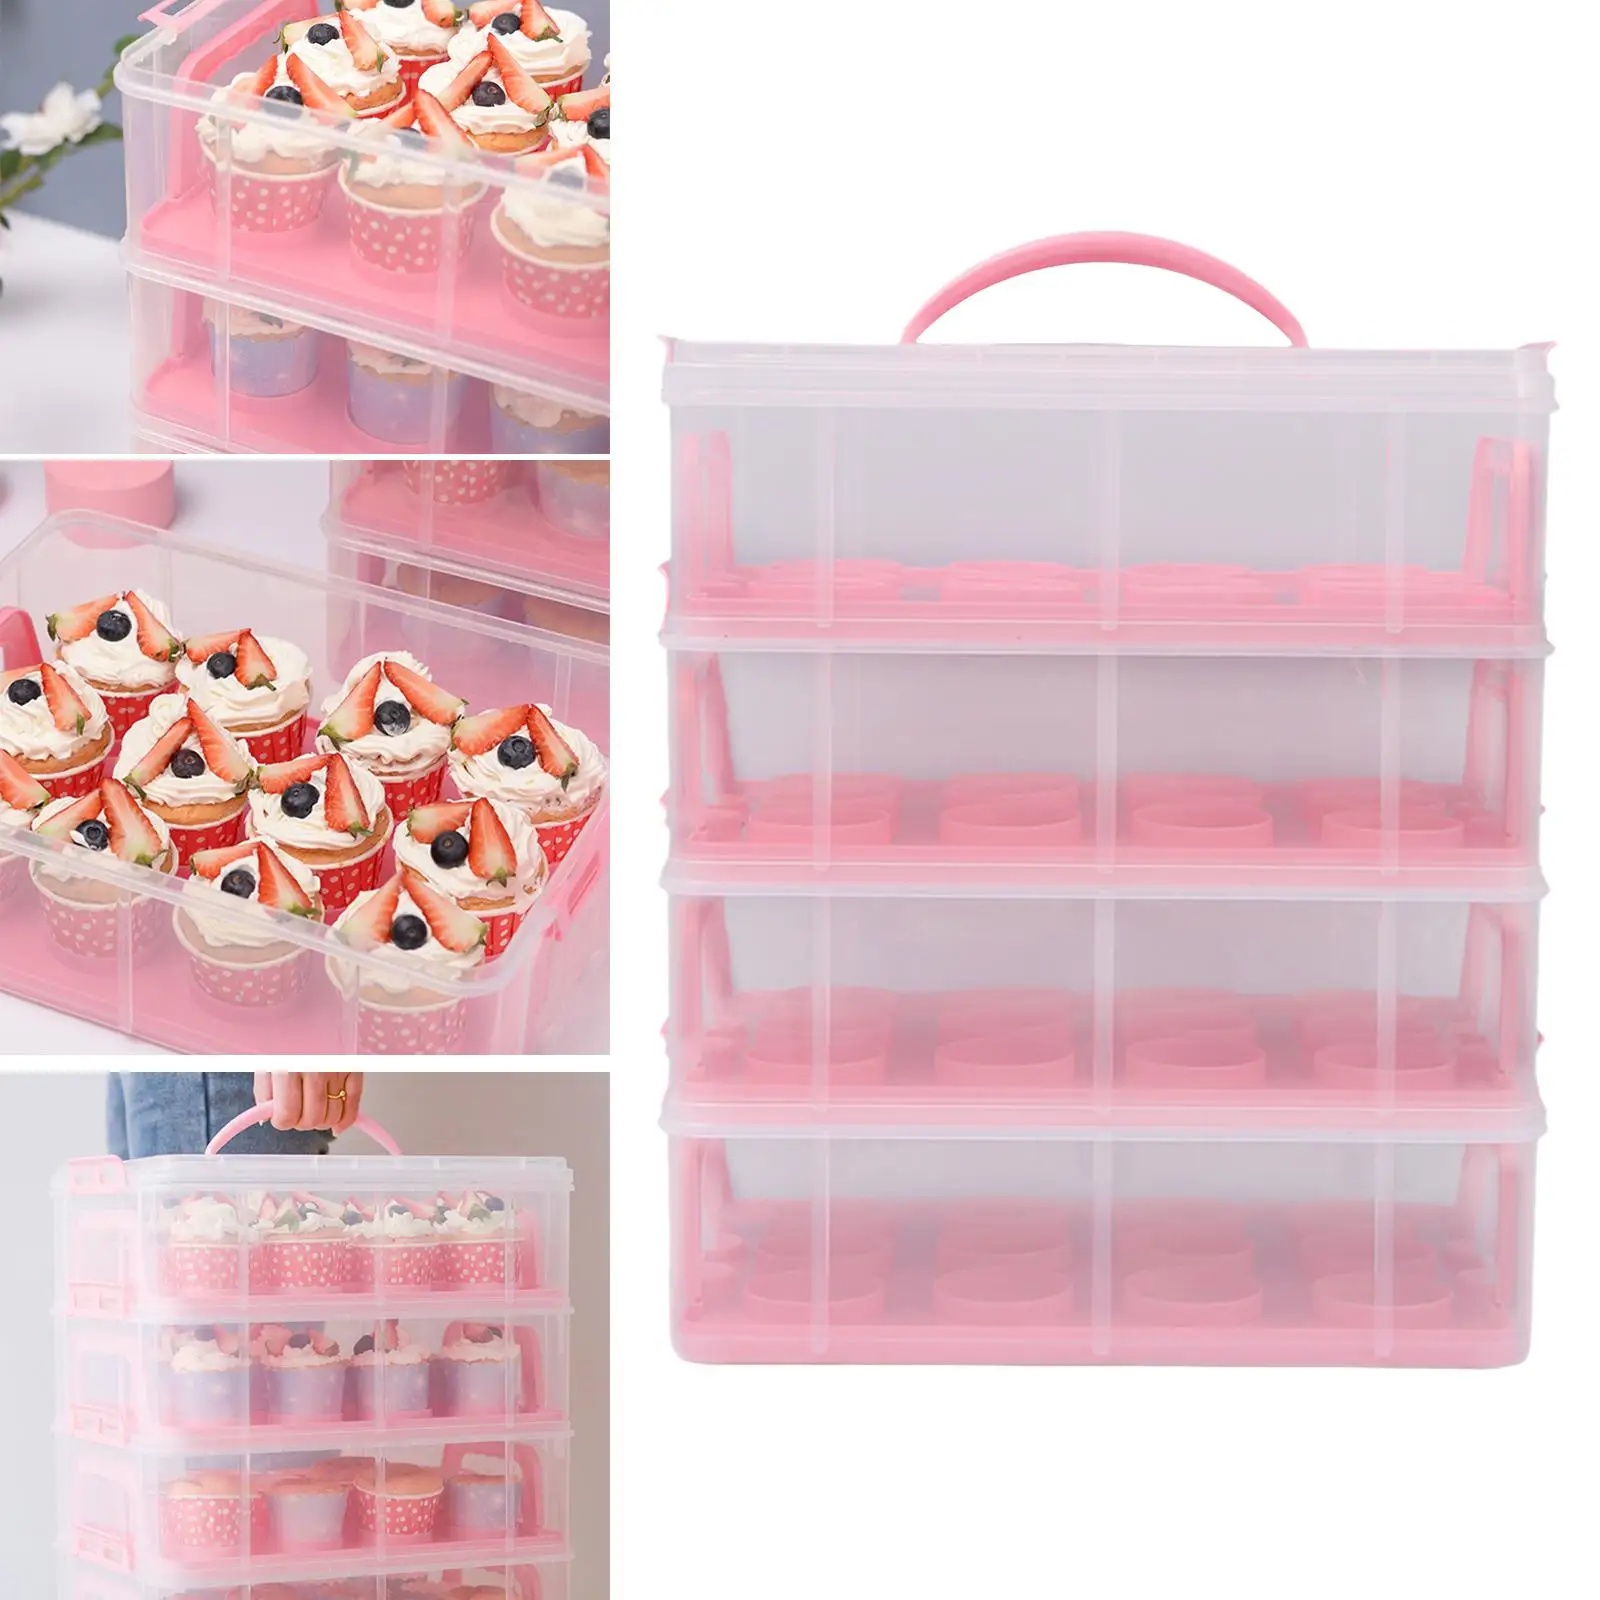 https://ae01.alicdn.com/kf/Sd6926d2bf36441c59e83e247a71b540bZ/4-Tiers-Cupcake-Carrier-Food-Holder-Holds-48-Cupcakes-Dessert-Container-Case-Portable-Cake-Holder.jpg